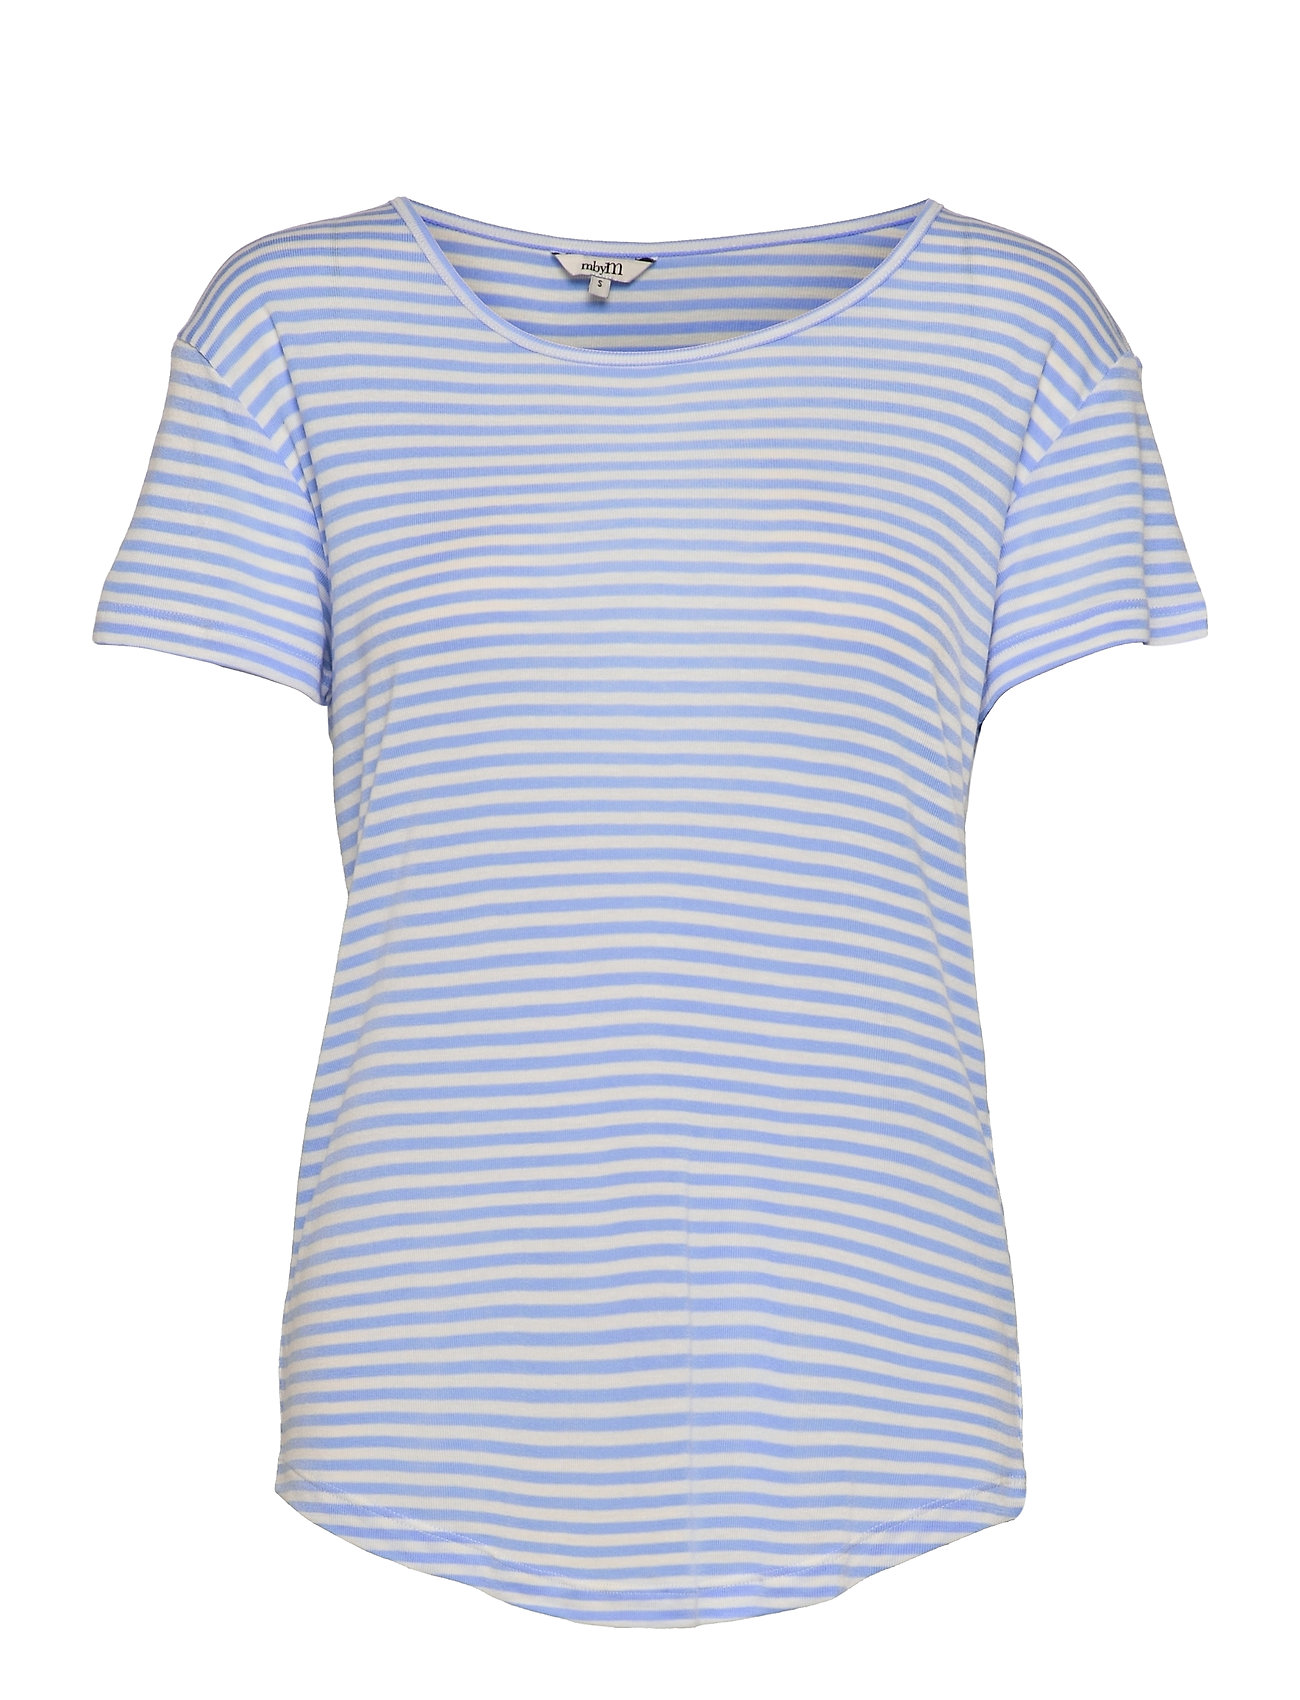 Lucianna T-shirts & Tops Short-sleeved Sininen MbyM, mbyM